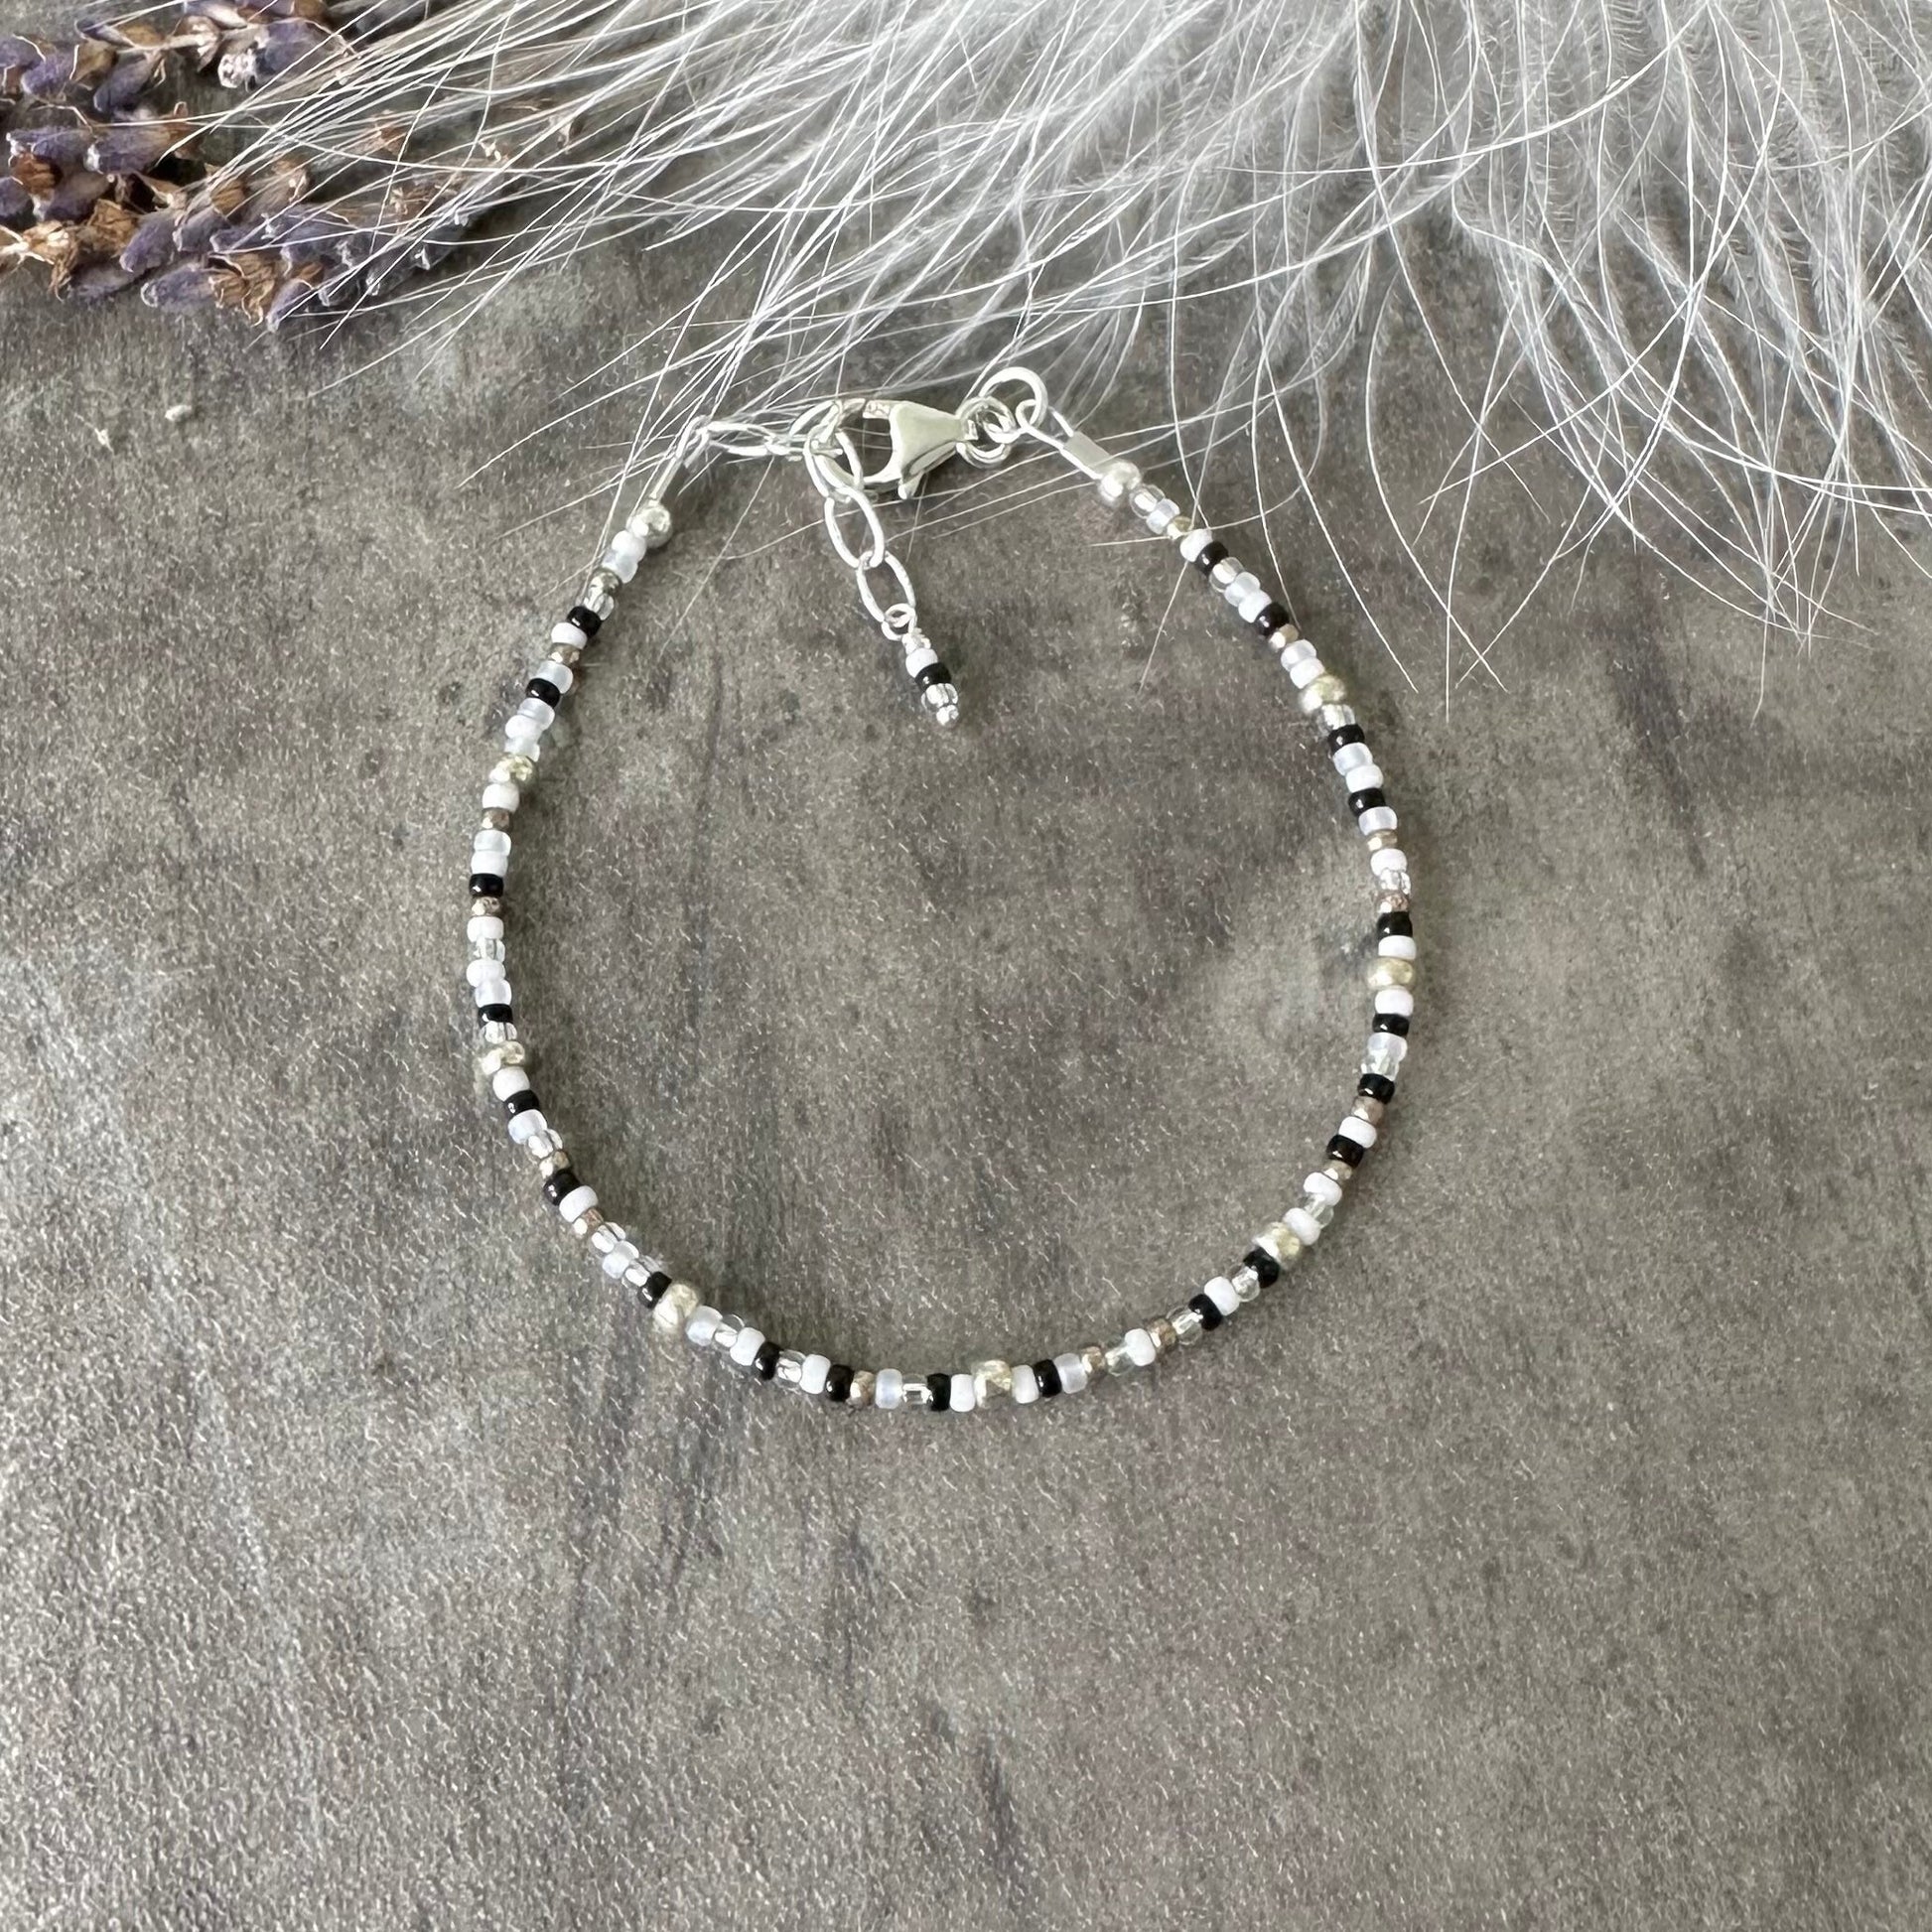 Black White Monochrome Bracelet with seed beads